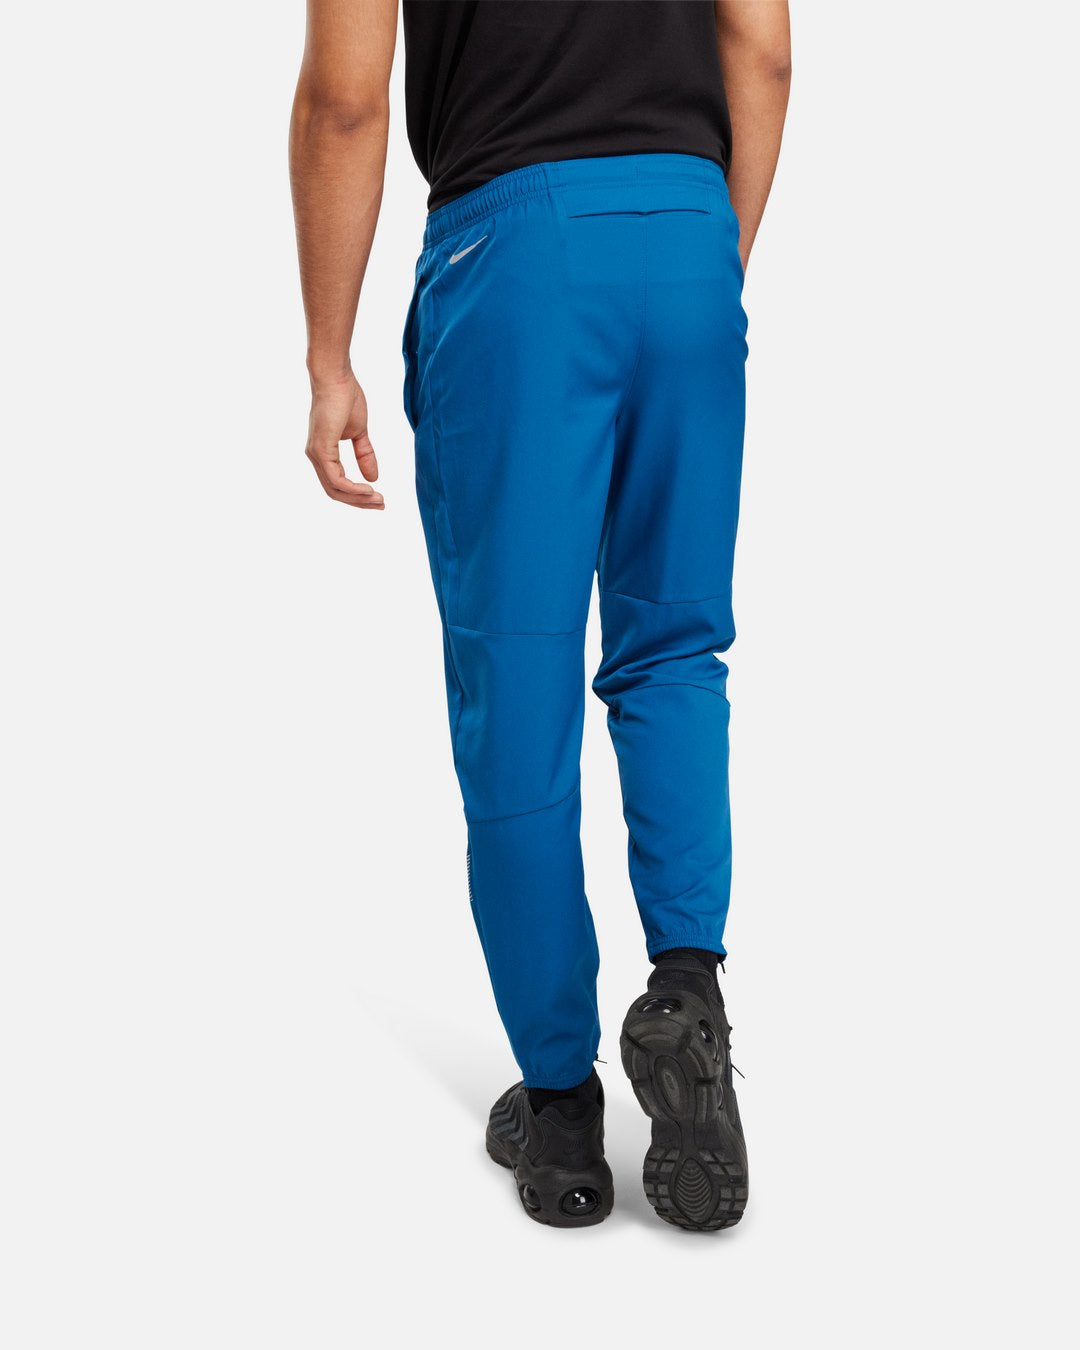 Nike Challenger Flash Pants - Blue